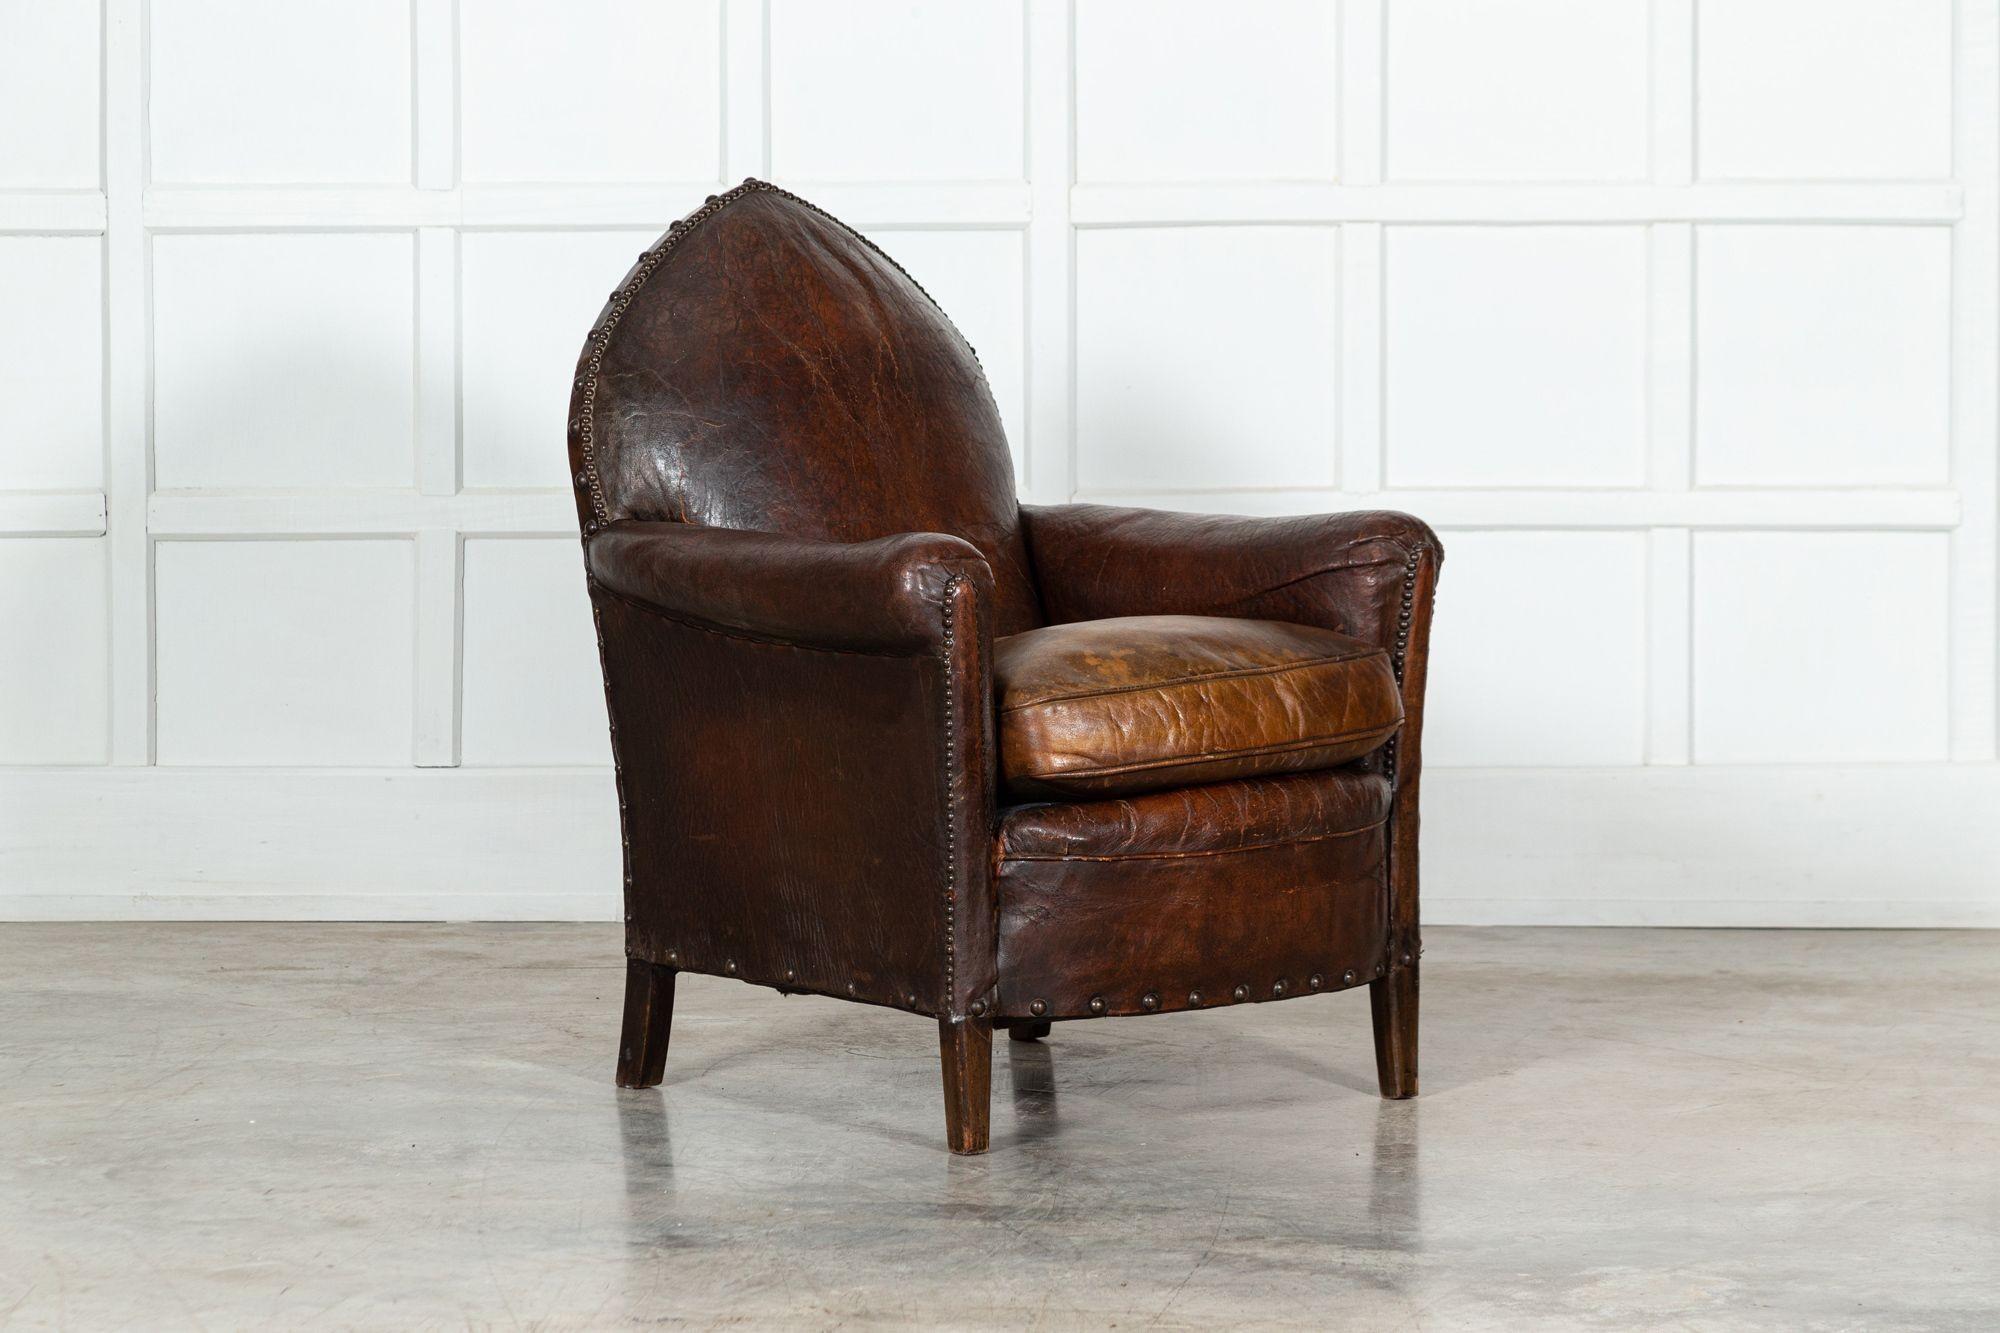 circa 1870
19thC English Gothic Leather Armchair
sku 1520
W76 x D63 x H101 cm
Seat height 50 cm.